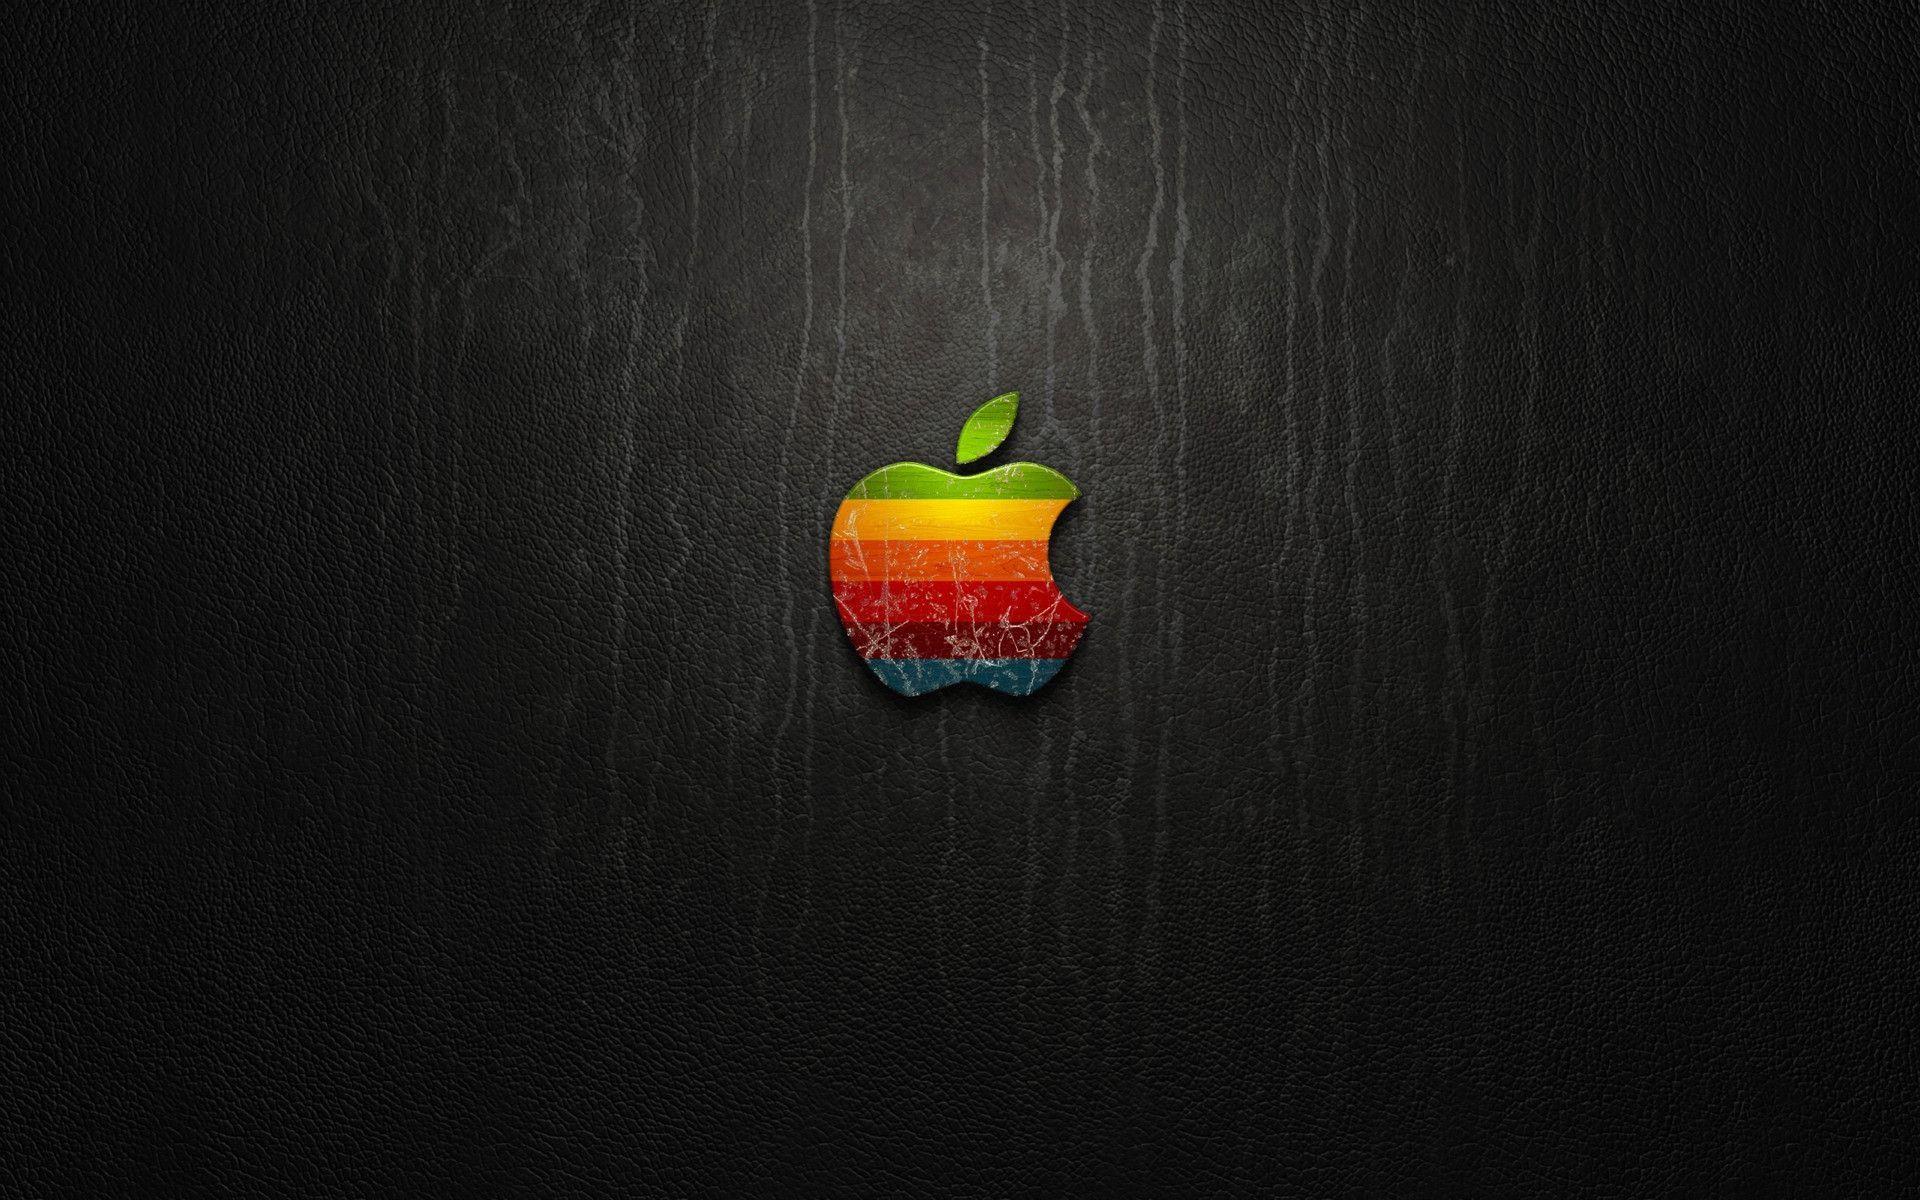 Retro Apple wallpaper